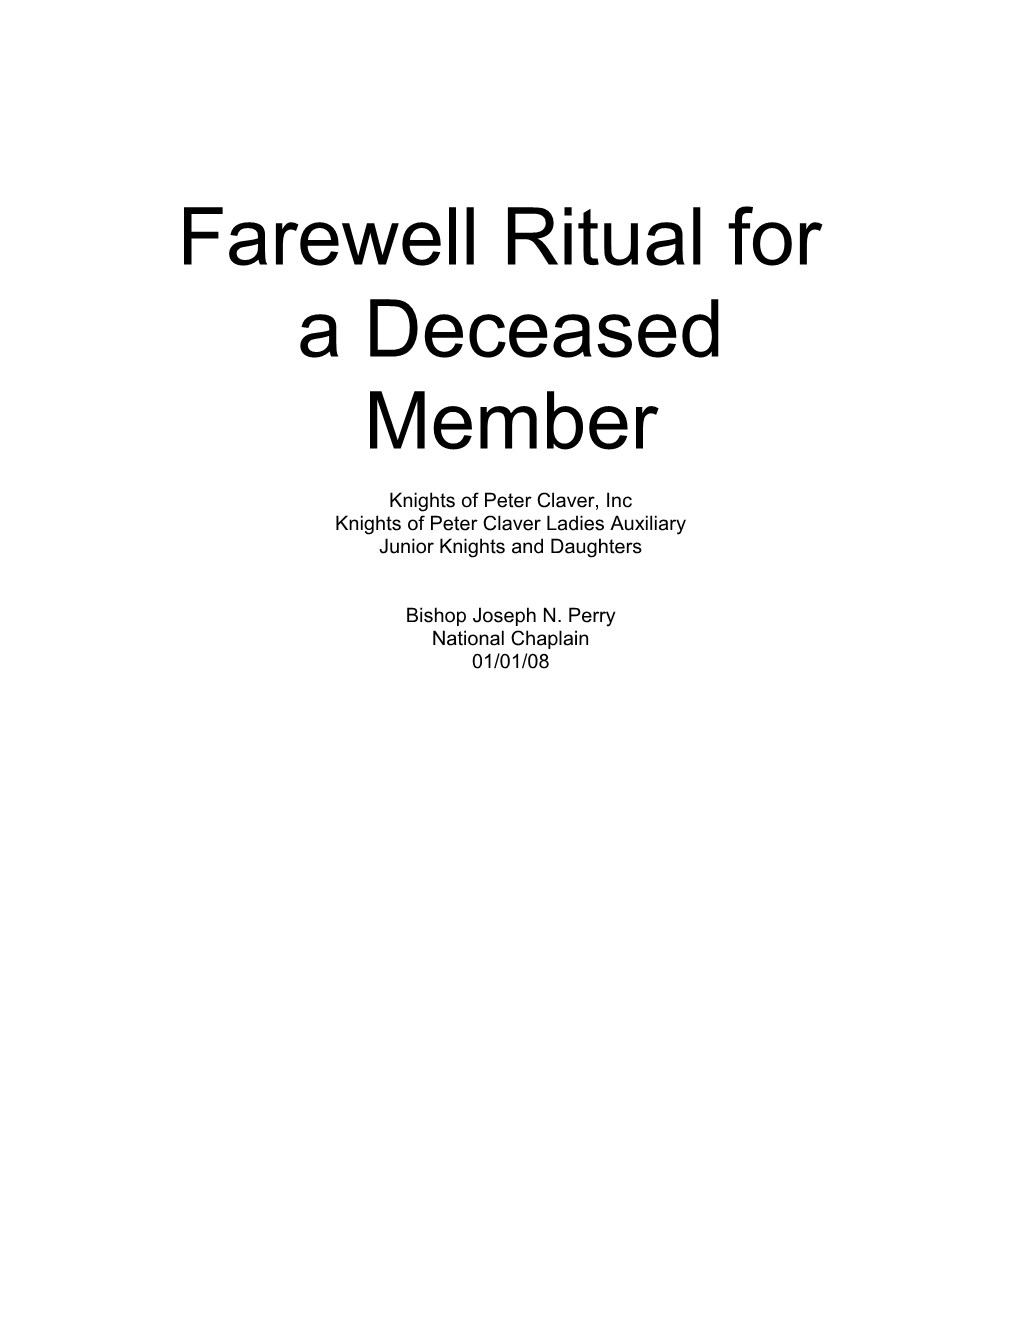 Draft Funeral Ritual